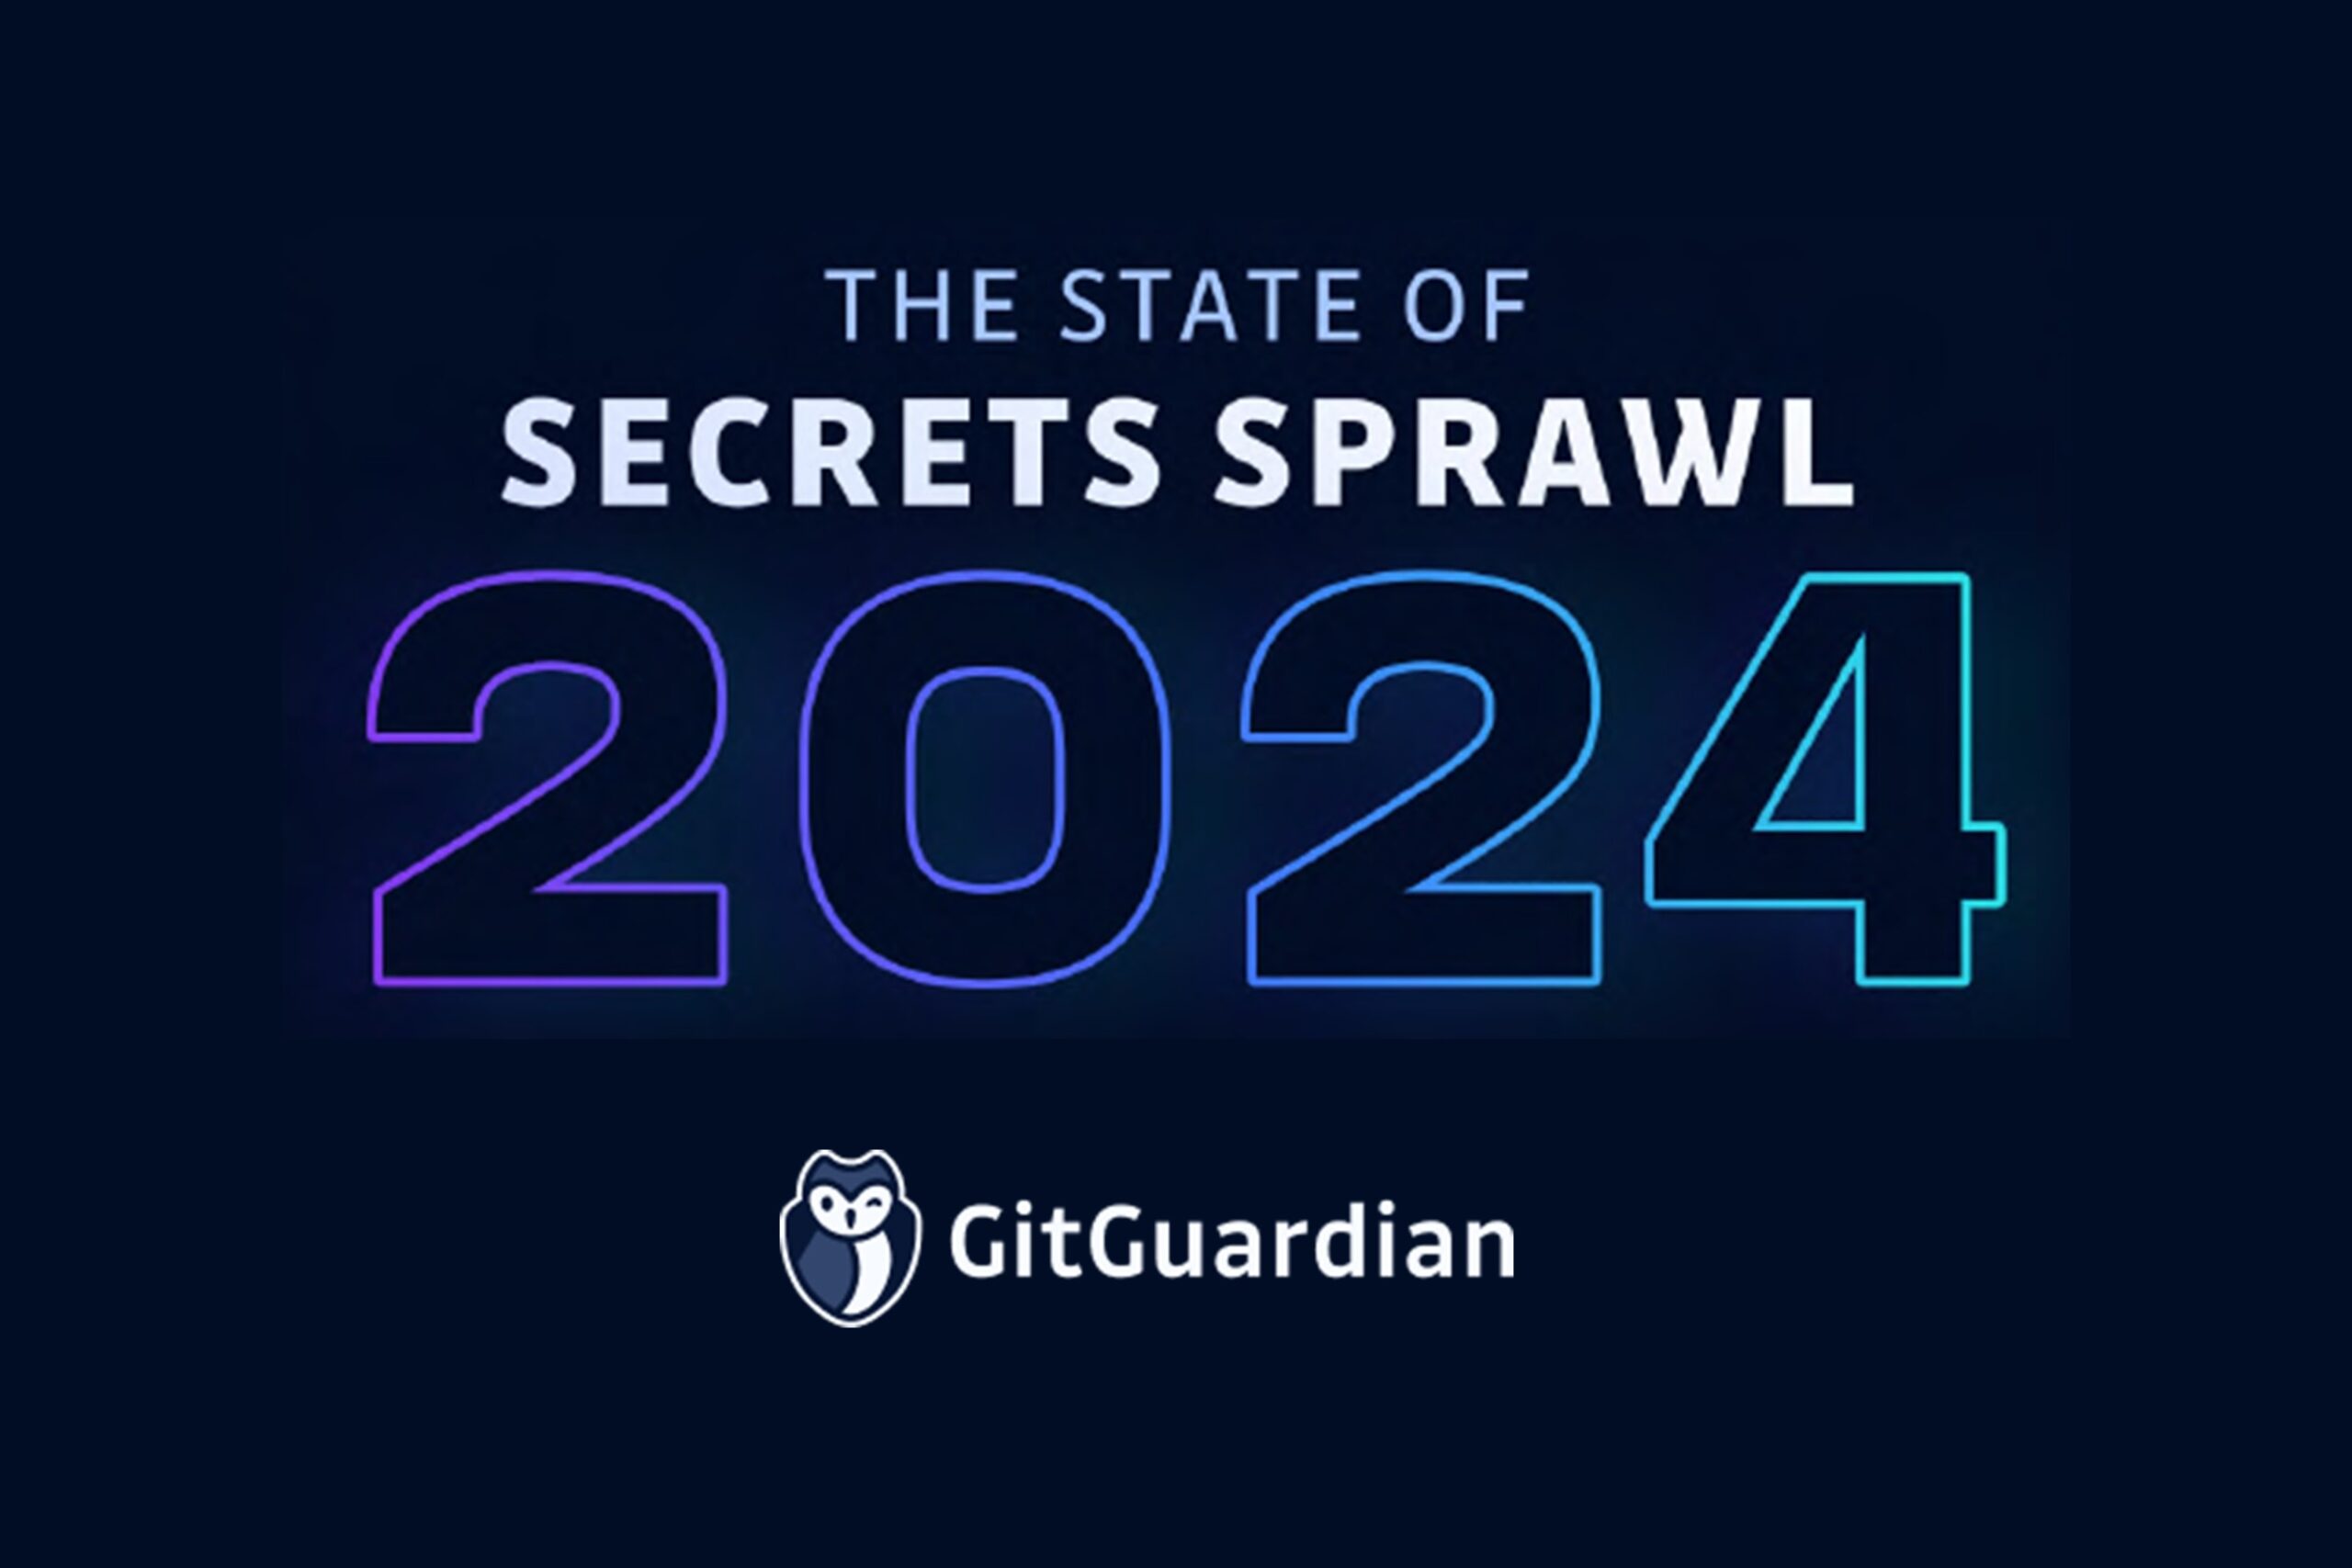 GitGuardianレポート「THE STATE OF SECRETS SPRAWL 2024」公開